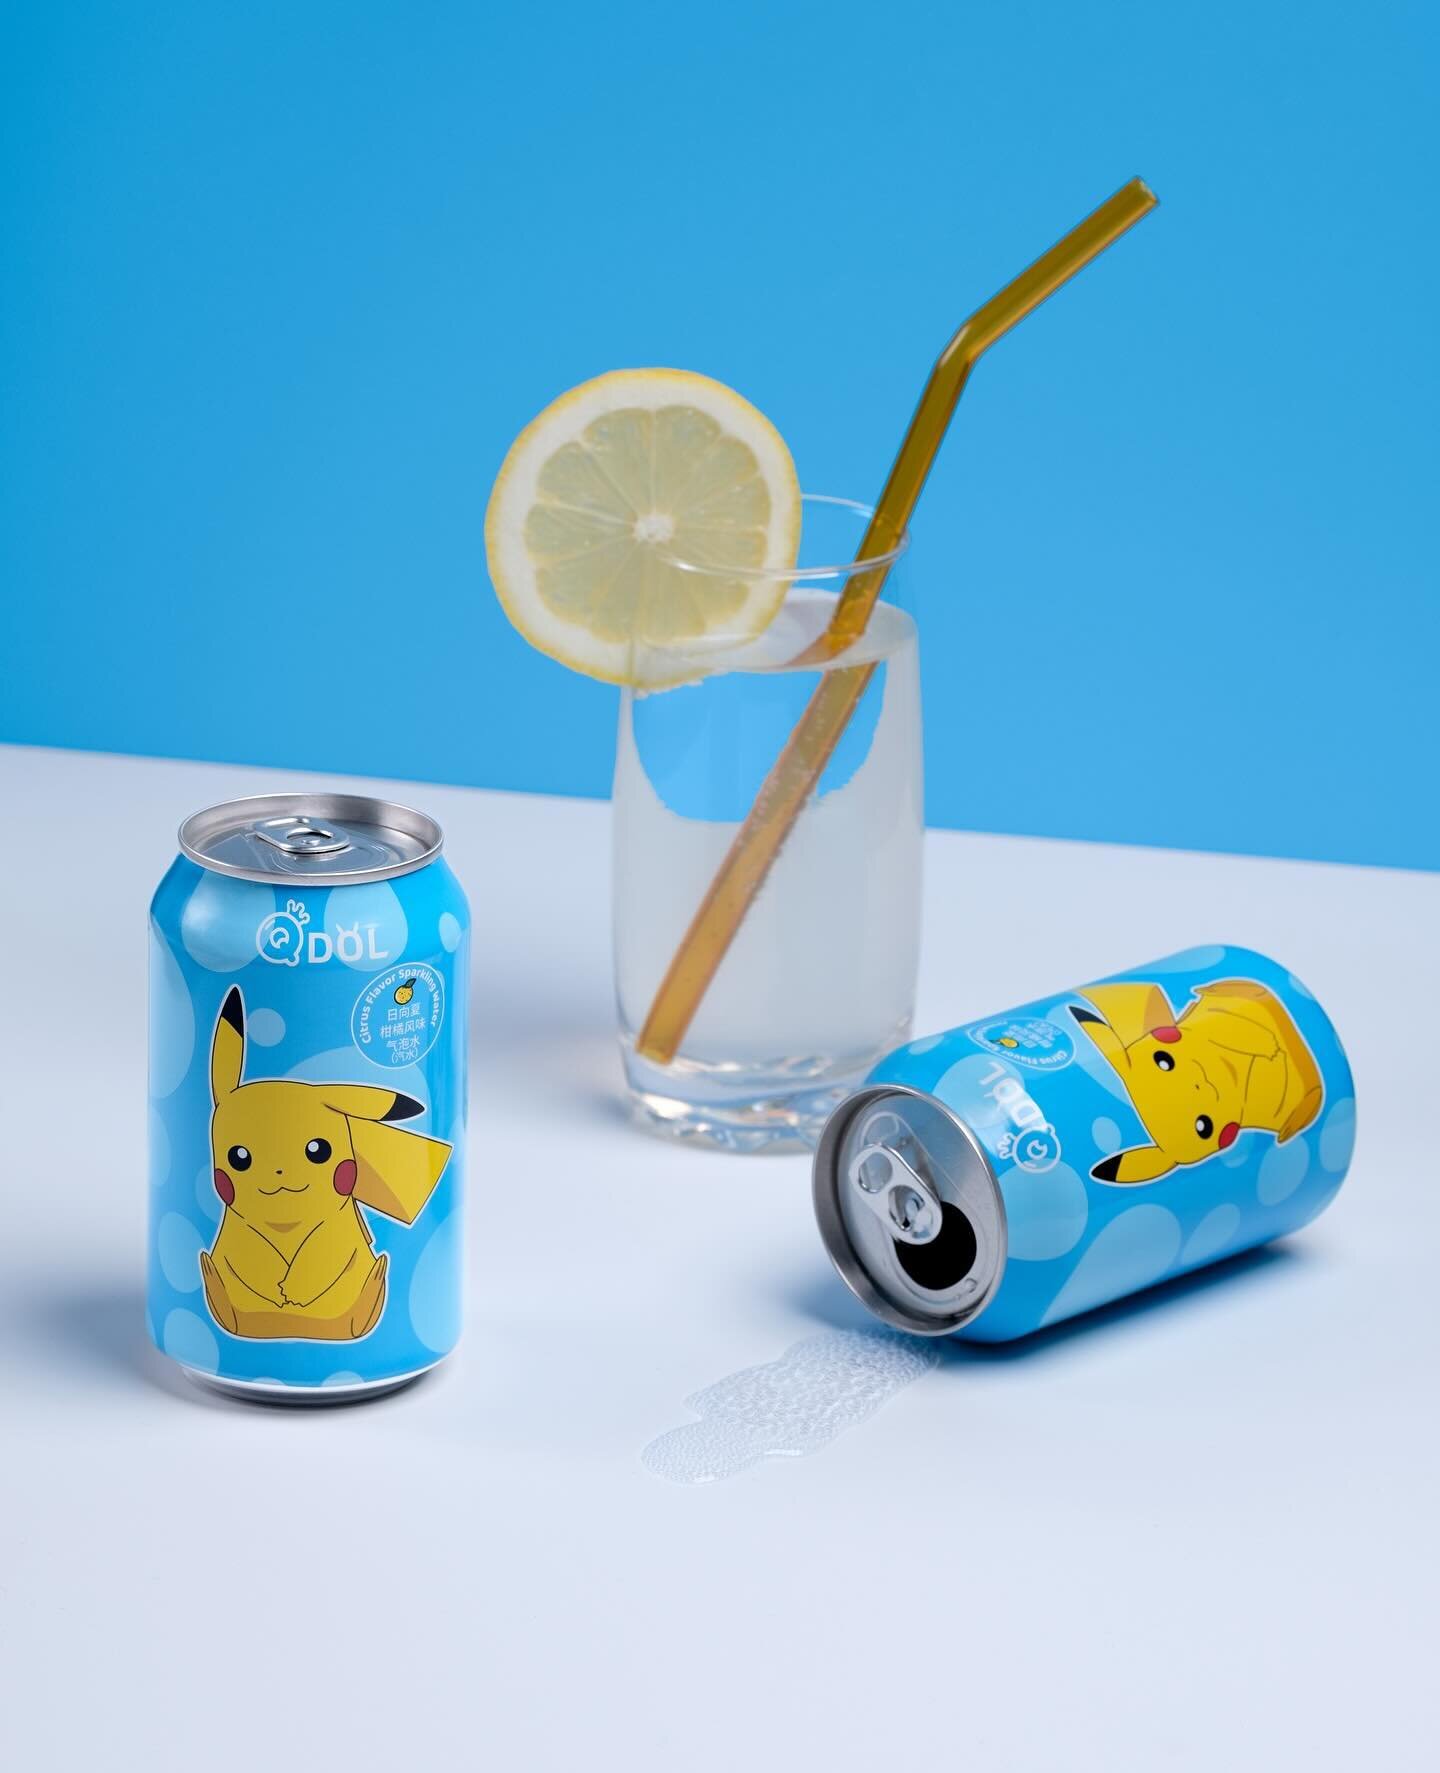 Gotta drink &lsquo;em all! 

Acqua frizzante al gusto Pikachu

#pokemon #pikachu #productphotography #productphotoshoot #productphotographer #commercialphotography #productphoto #sparklingwater #drinkphotography